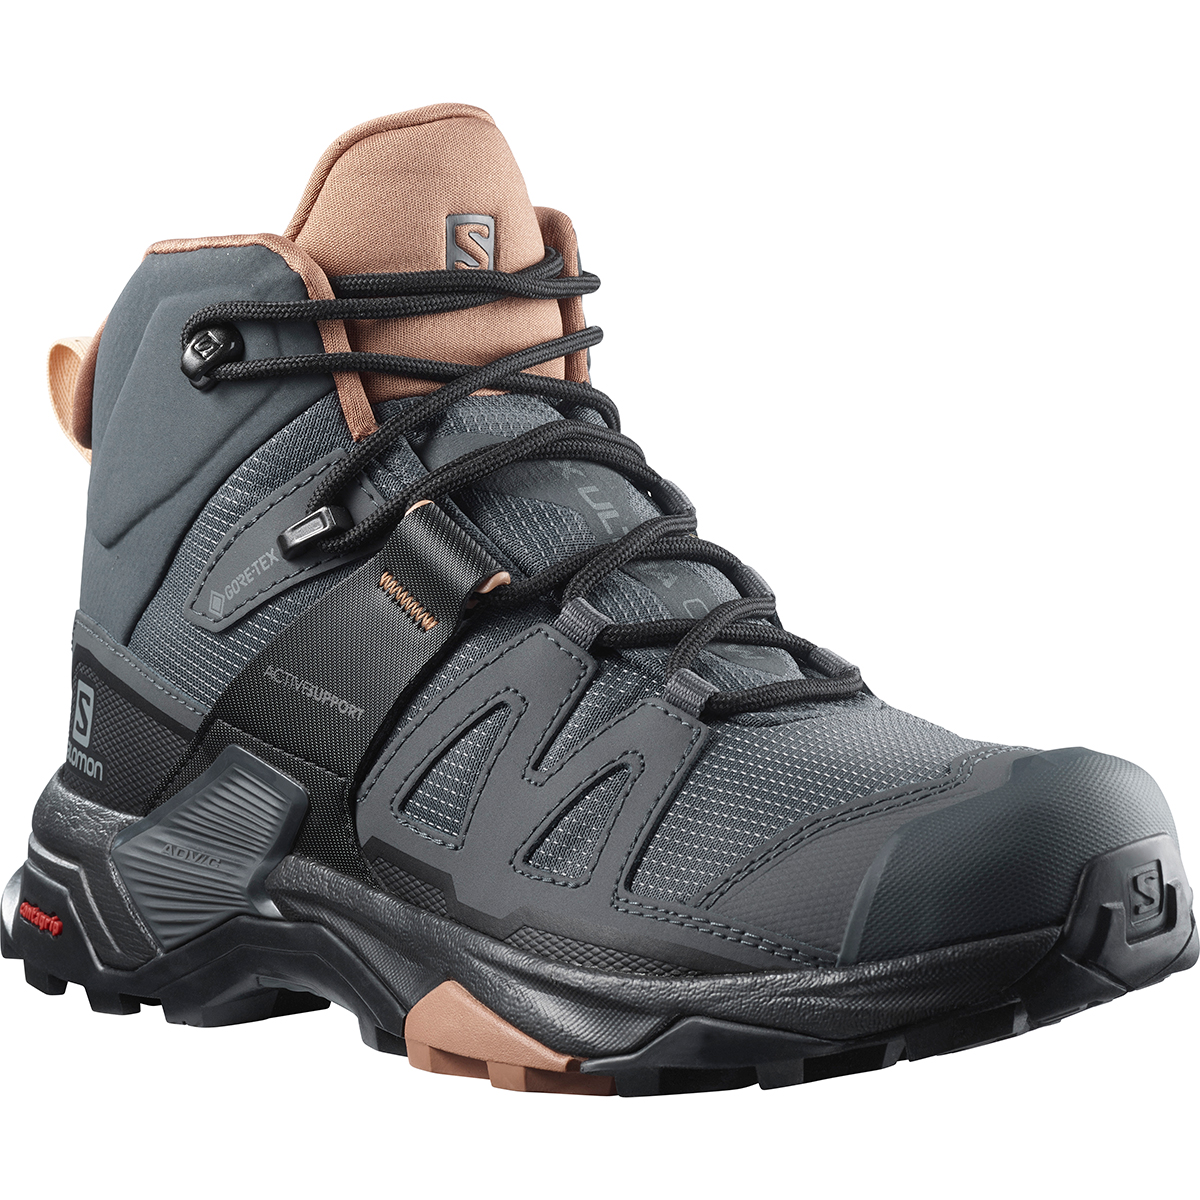 Salomon Women's X Ultra 4 Mid Gtx Hiking Boots - Size 7.5